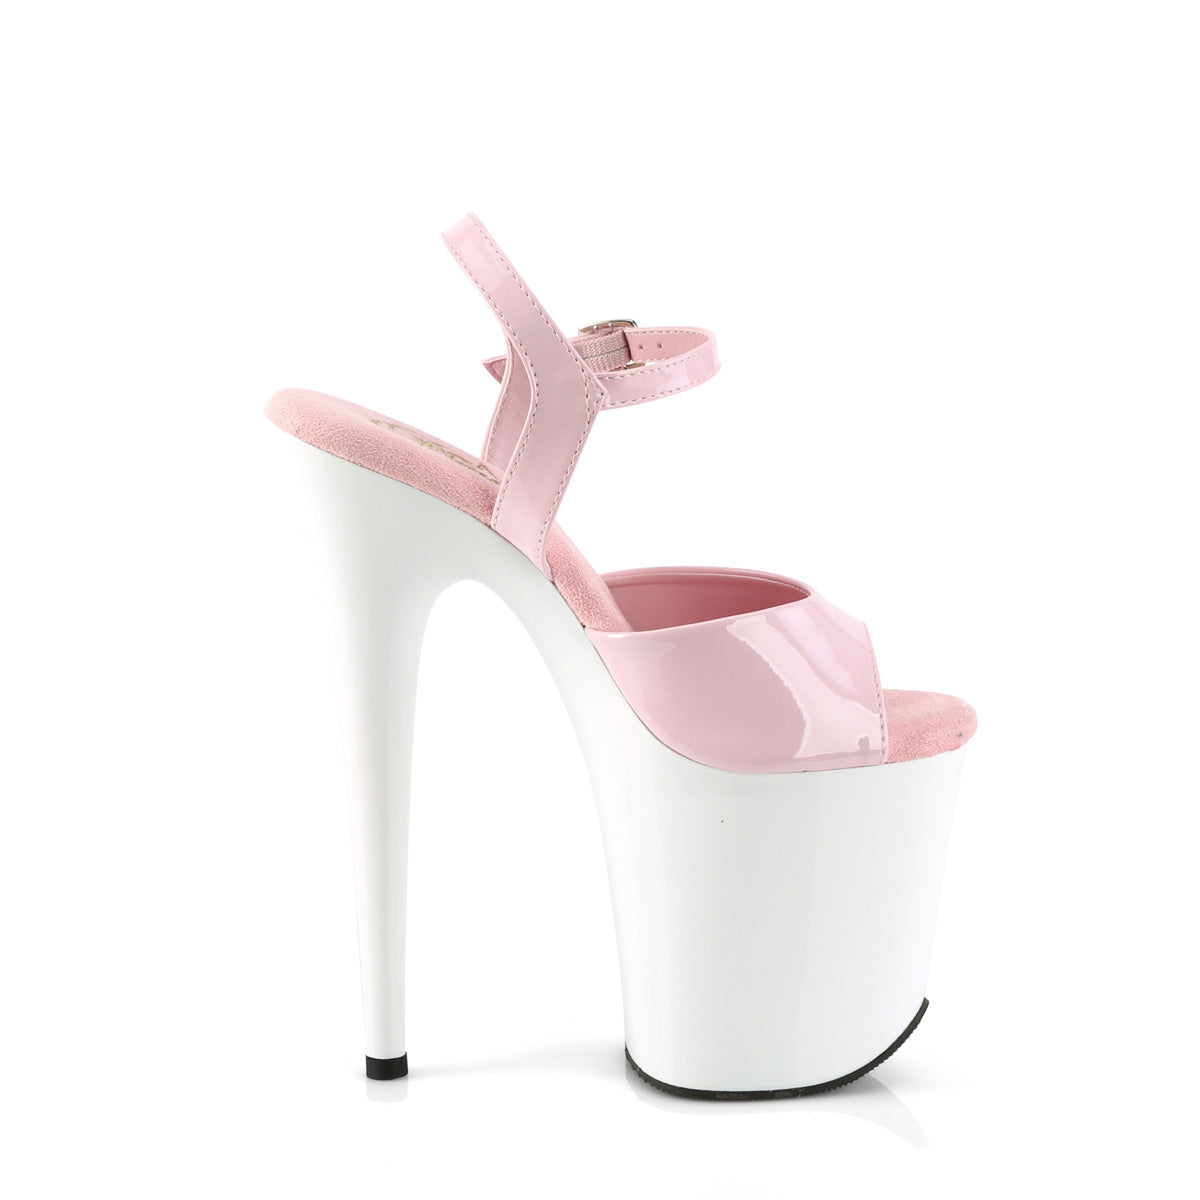 FLAMINGO-809 Pink & White Ankle Peep Toe High Heel